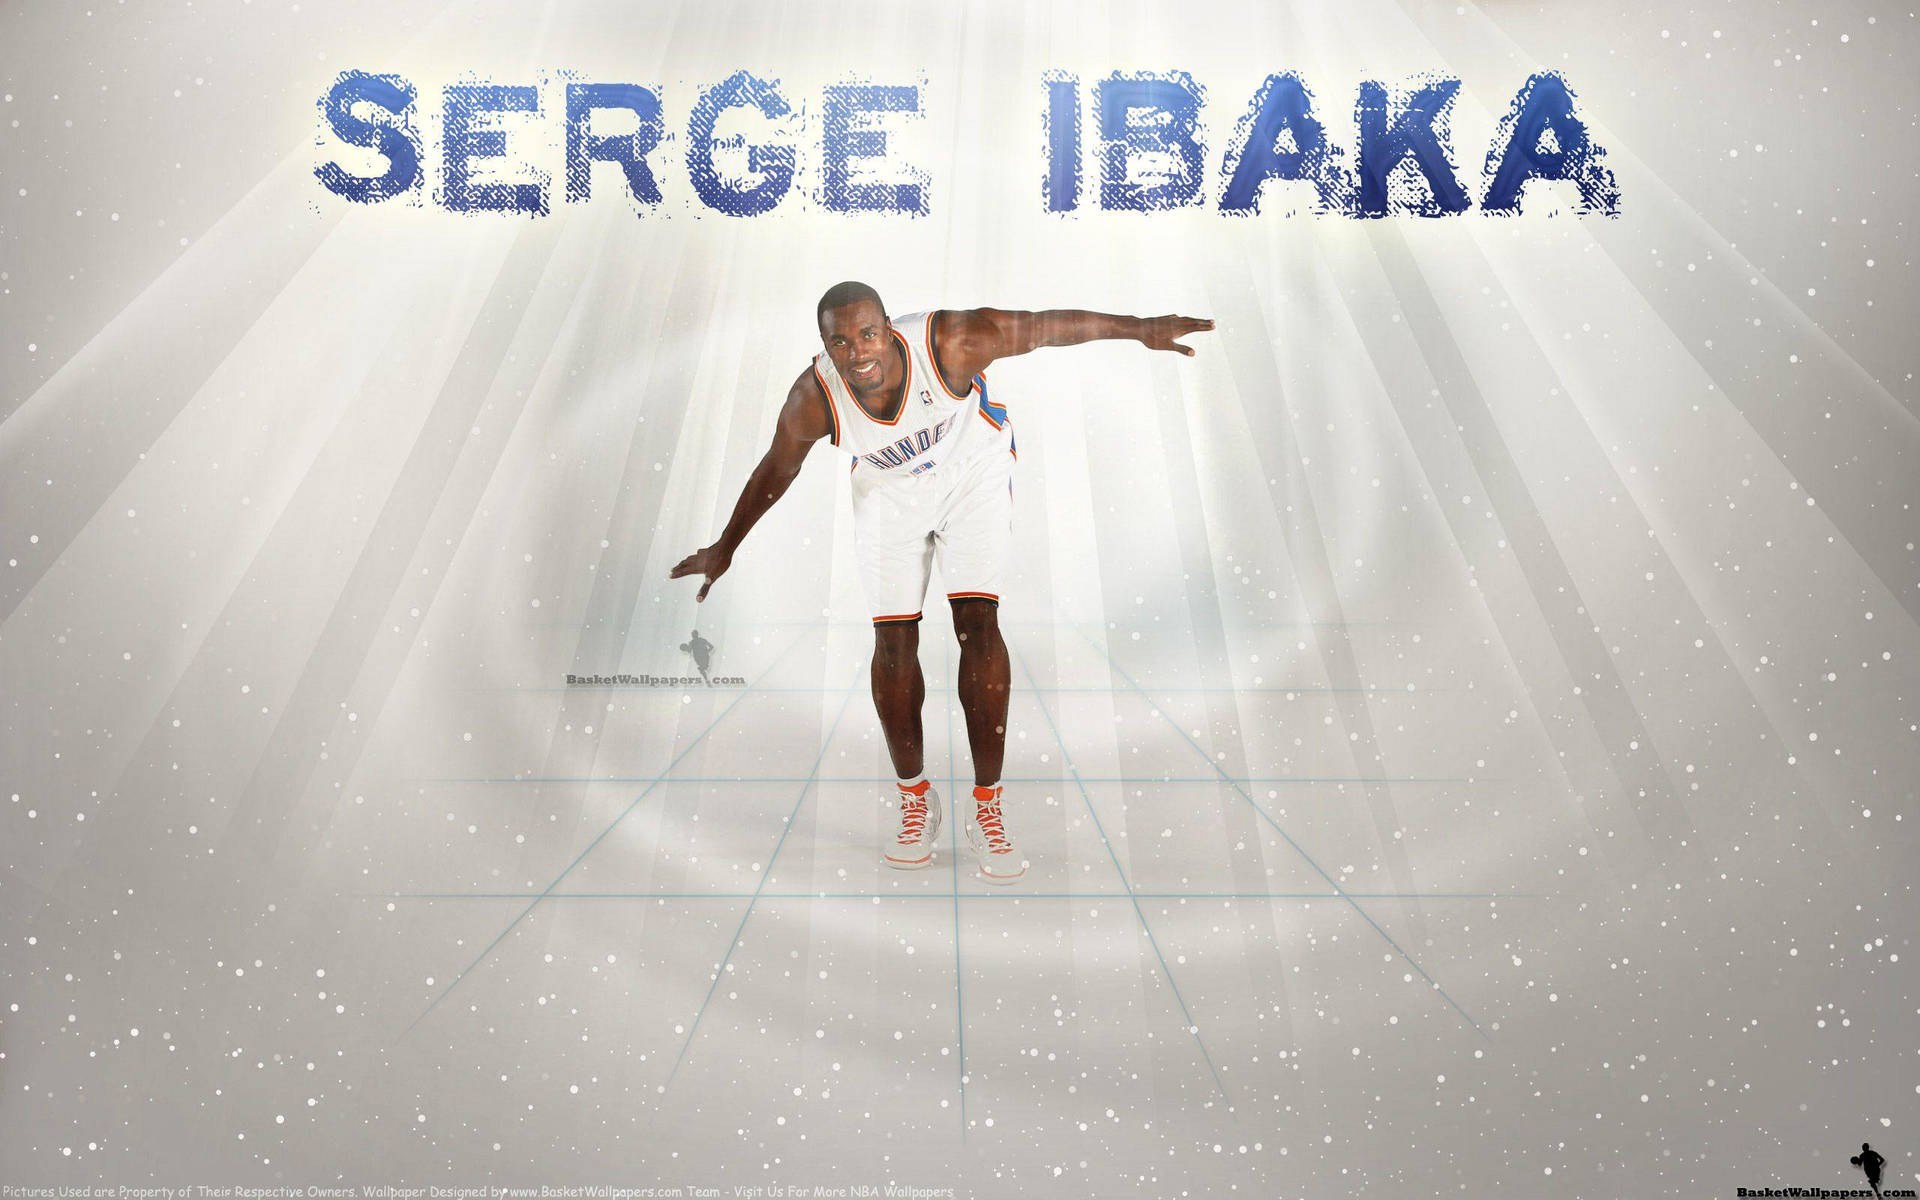 Serge Ibaka Playful Photograph Background